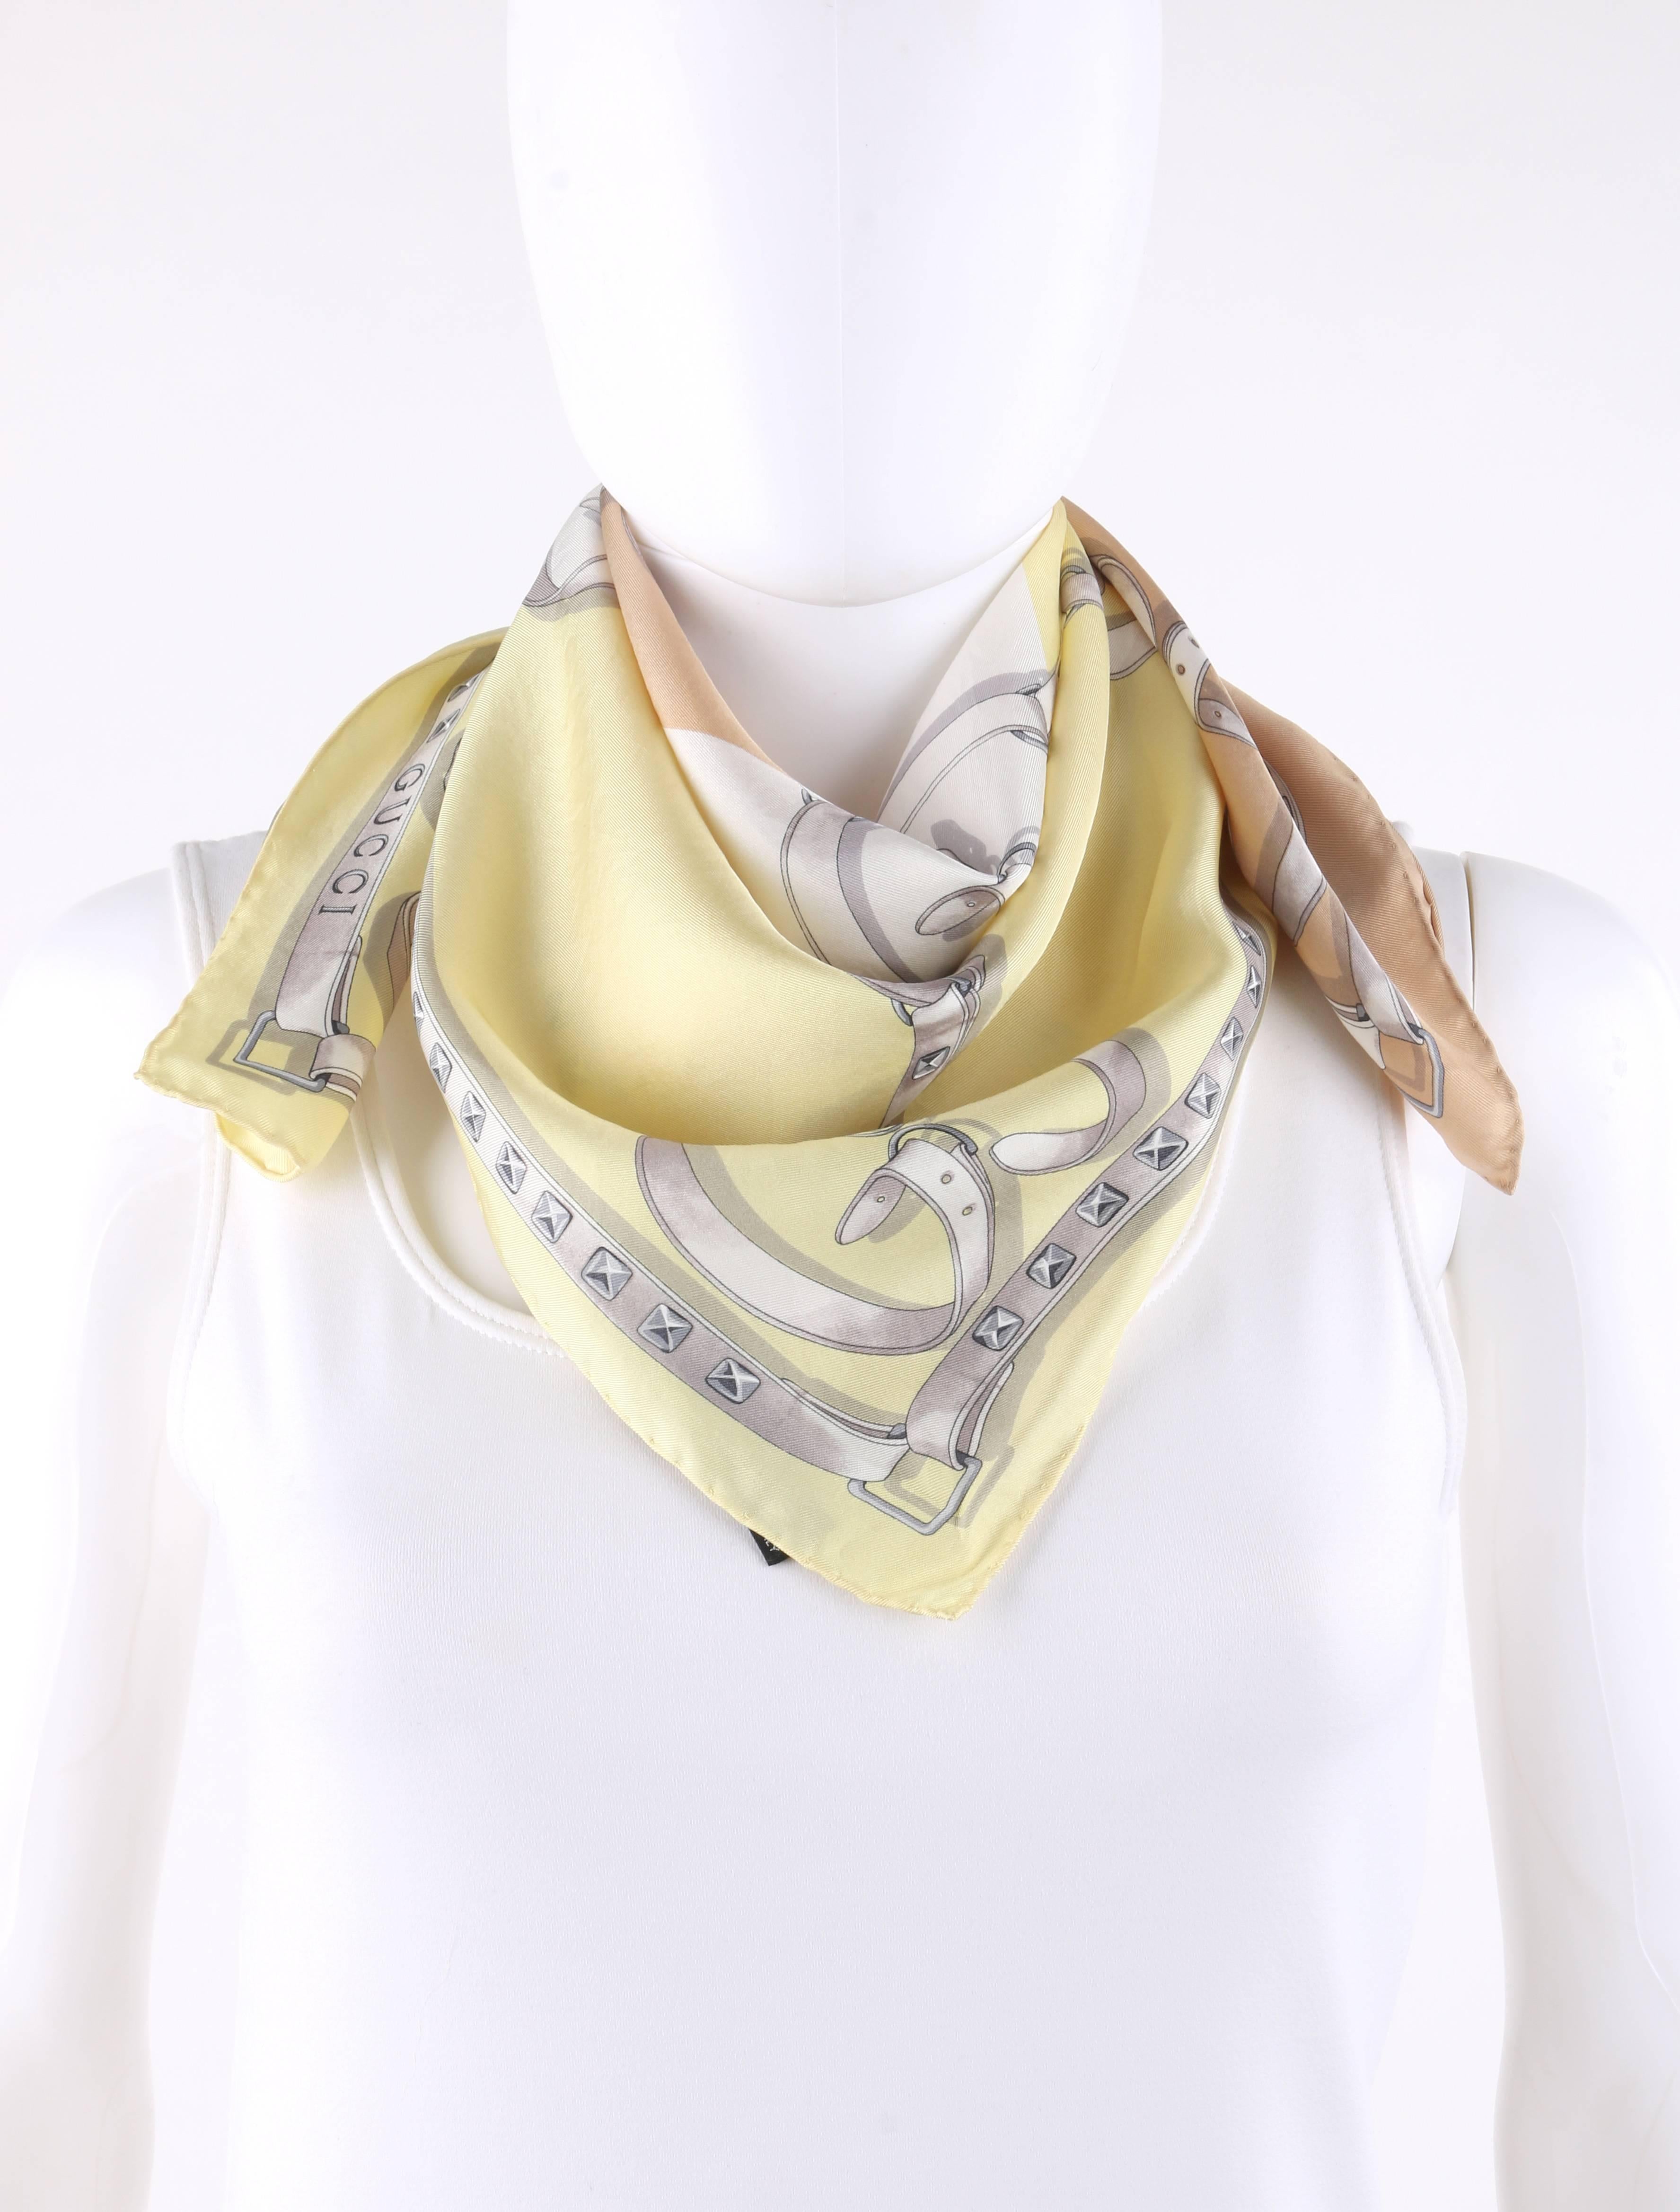 Gucci beige white yellow tri-color monogram belt print silk scarf. Tri-color background in beige, white, and soft yellow. White 